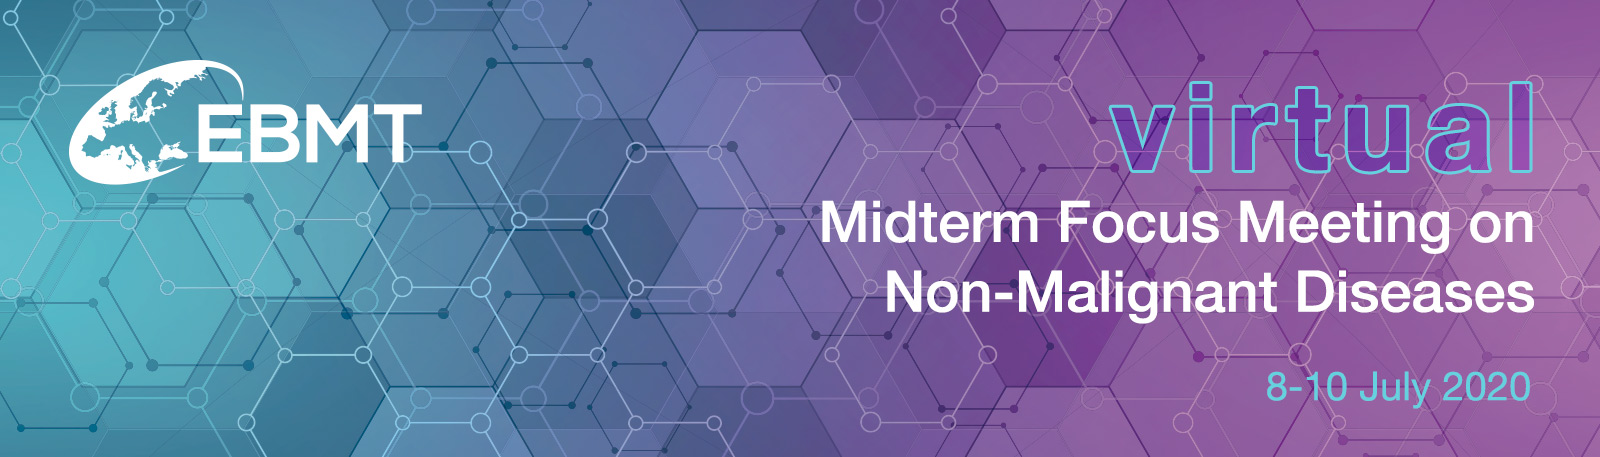 Midterm Focus Meeting on Non-Malignant Diseases 2020 | Virtual